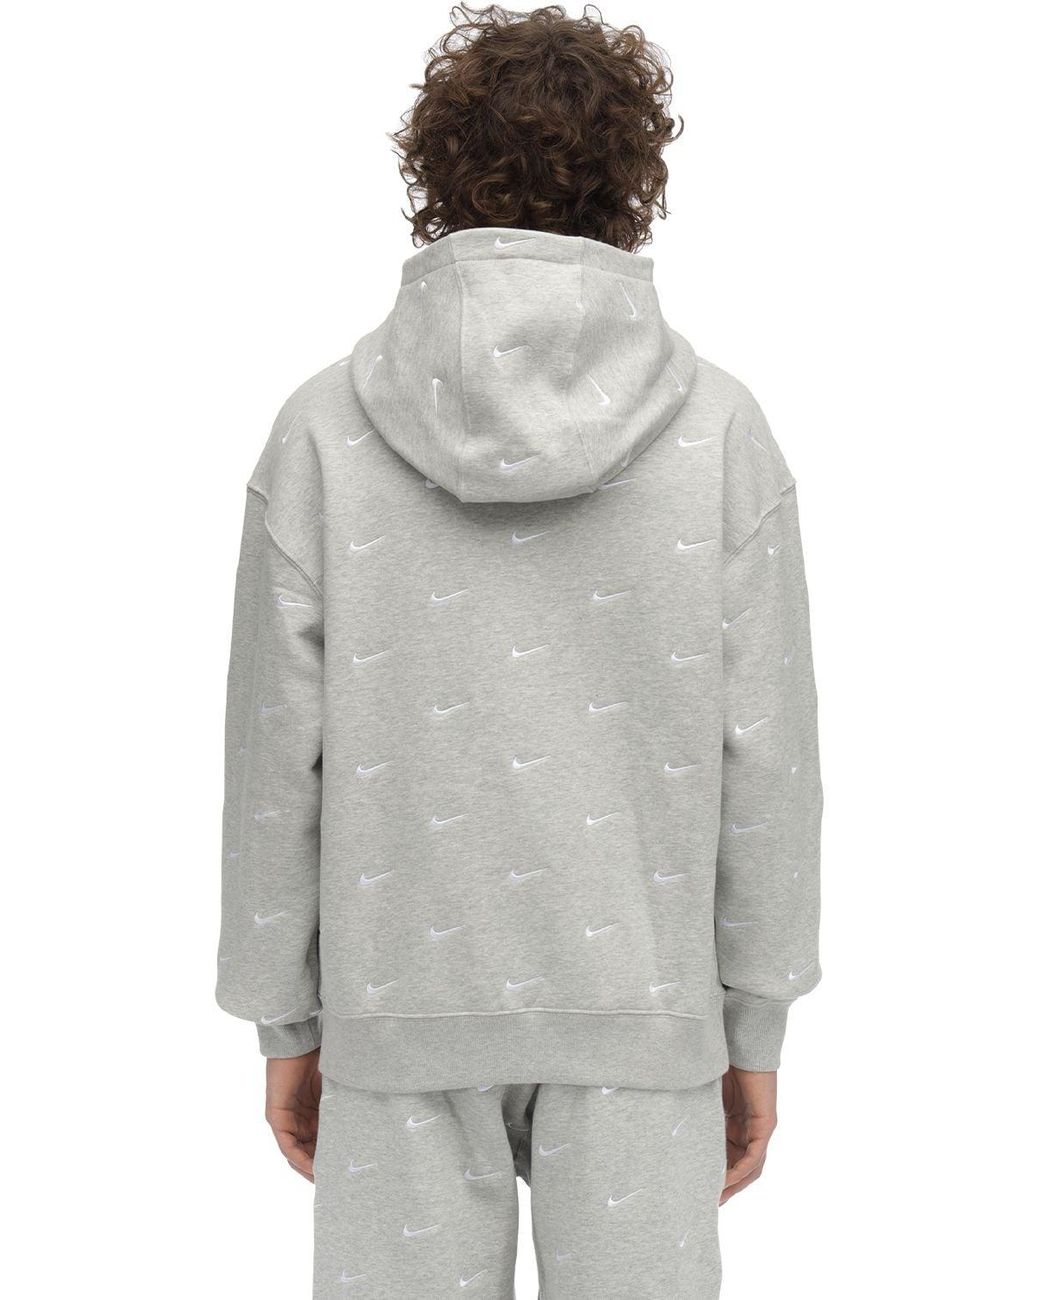 Nike Nrg Swoosh Logo Sweatshirt Hoodie in Heather Grey (Gray) for Men | Lyst